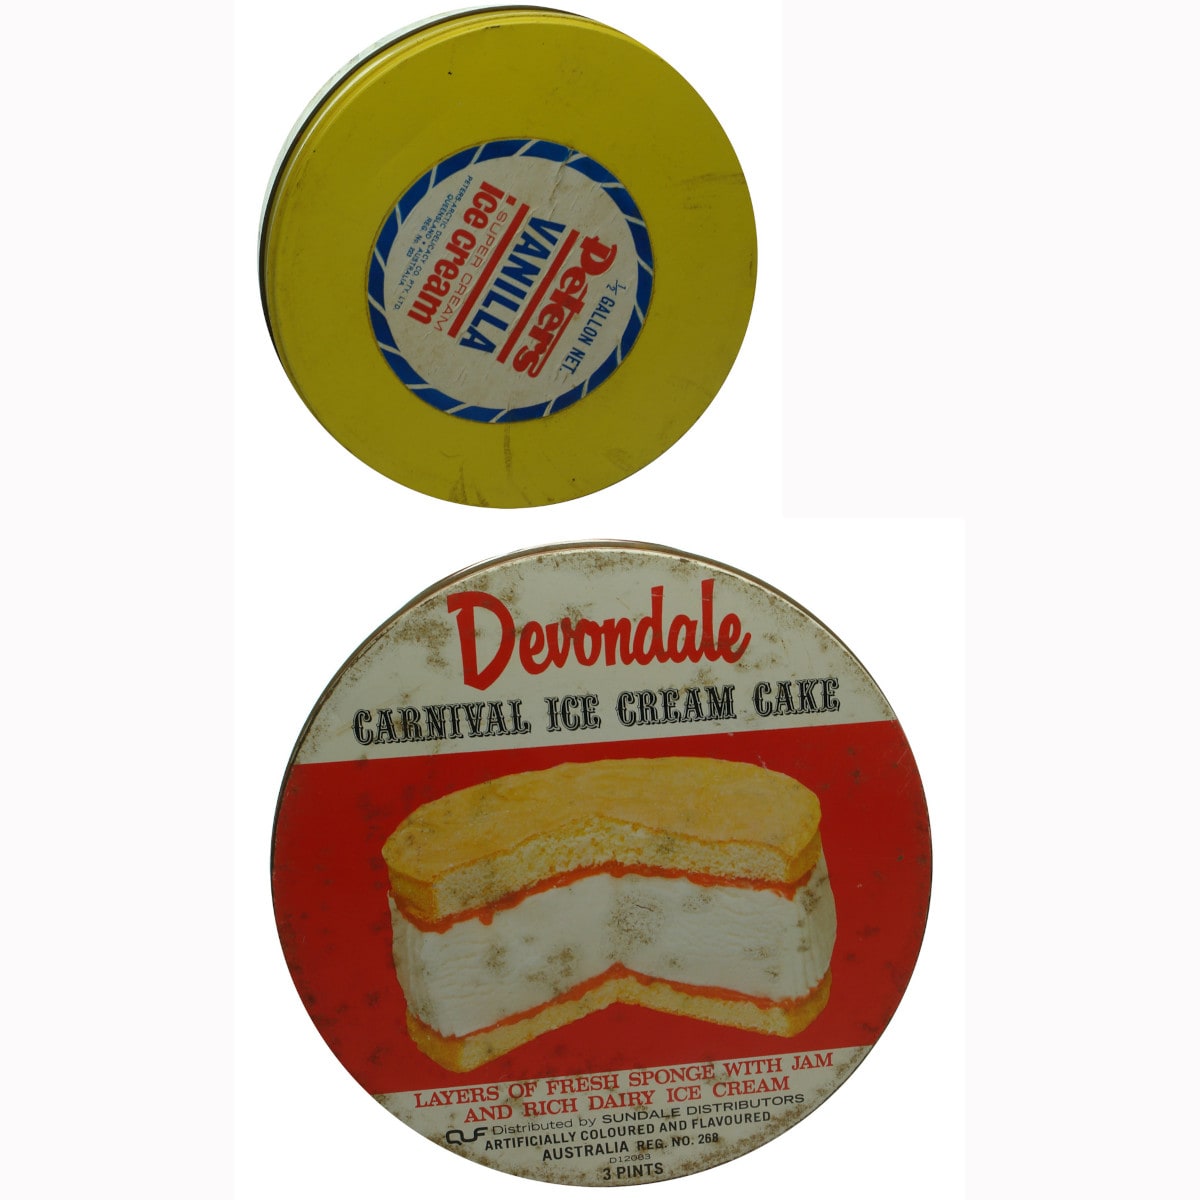 Pair of Ice Cream type tins. Peters Vanilla and Devondale Ice Cream Cake.